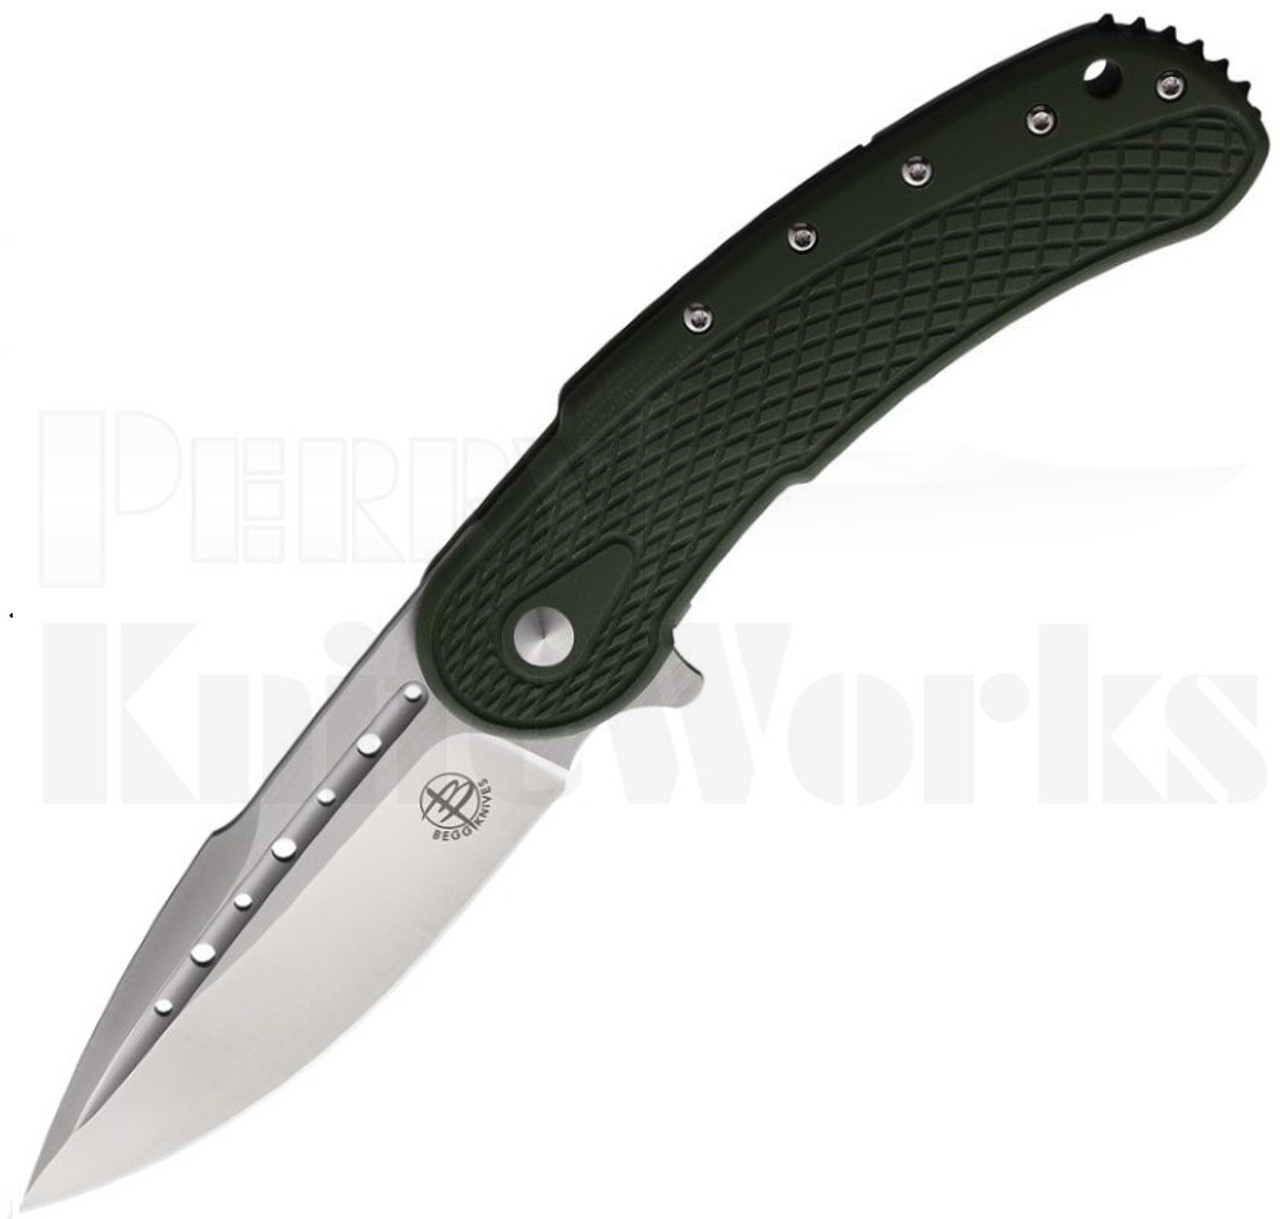 Begg Knives Steelcraft Series Bodega Knife Green G-10 l For Sale